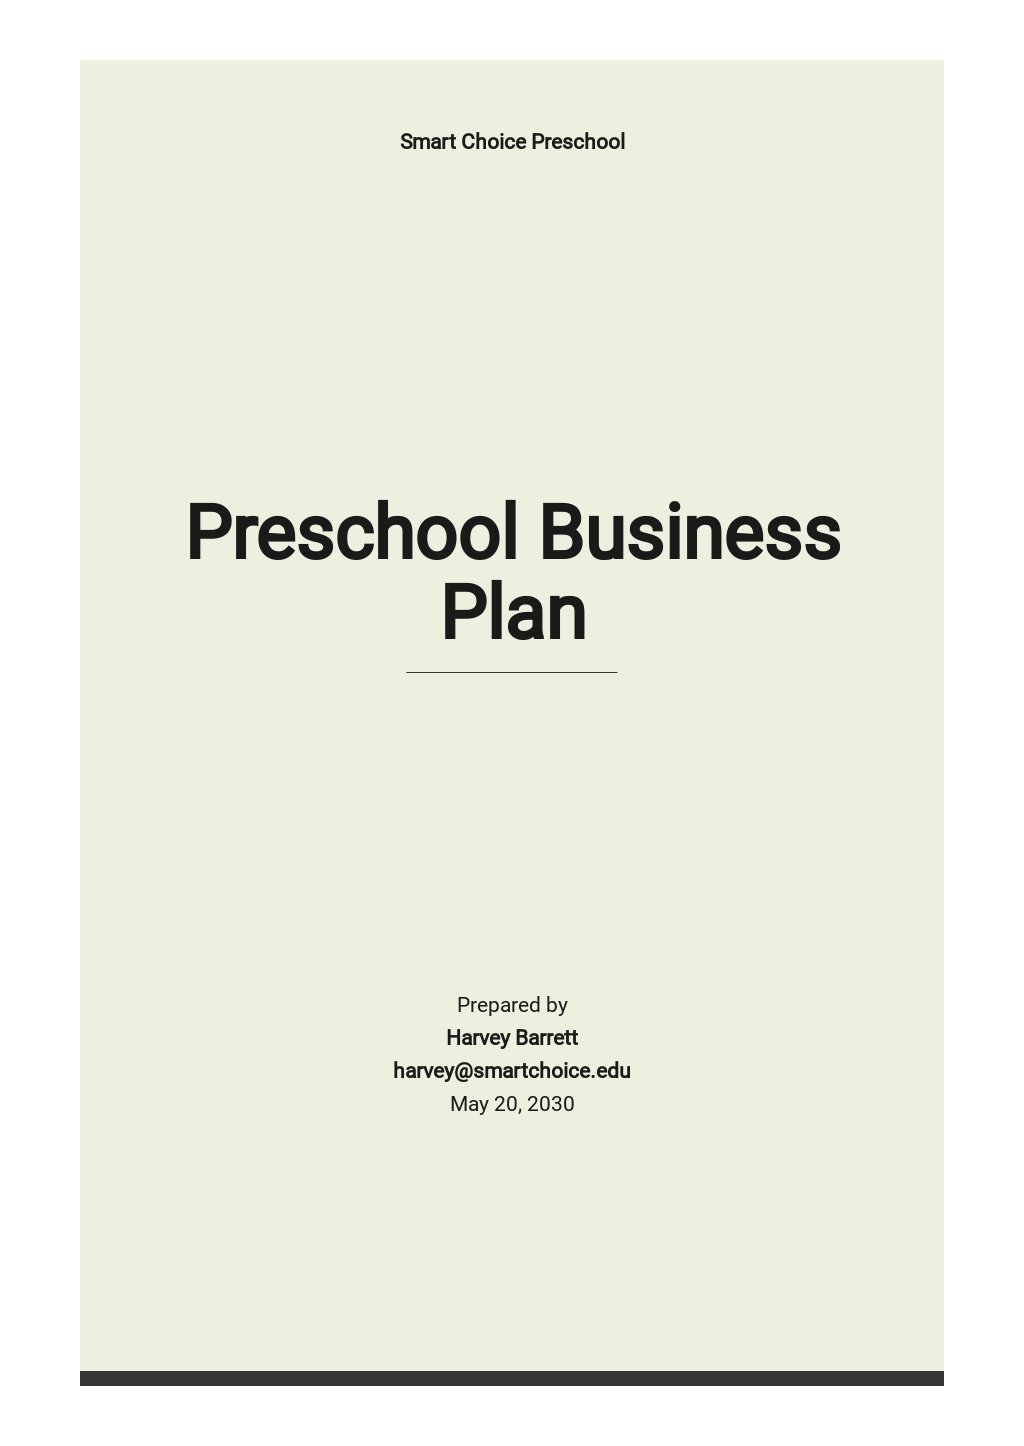 creating a business plan for a preschool